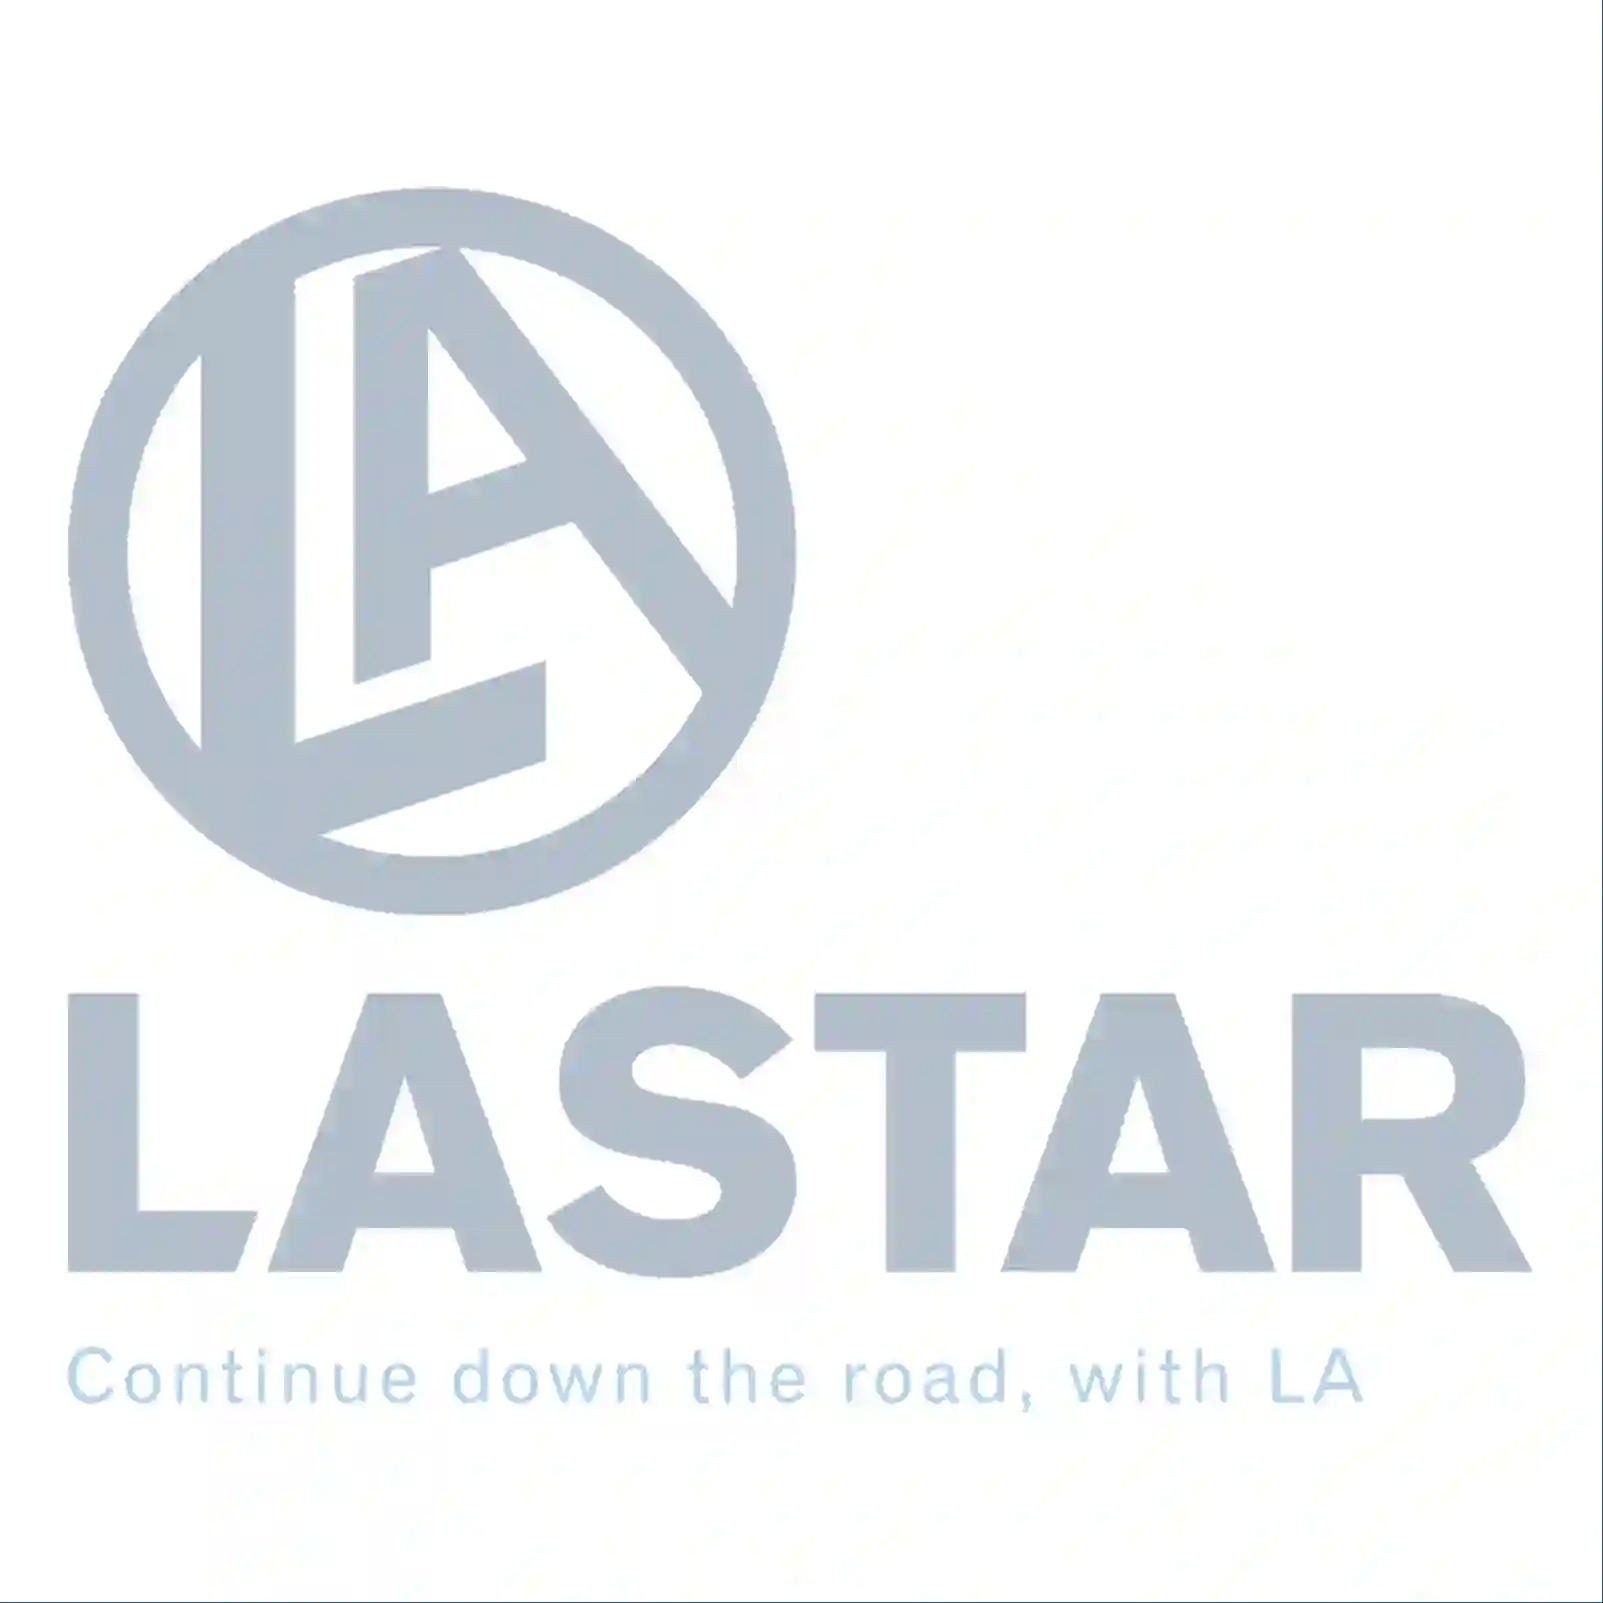  Test connector || Lastar Spare Part | Truck Spare Parts, Auotomotive Spare Parts